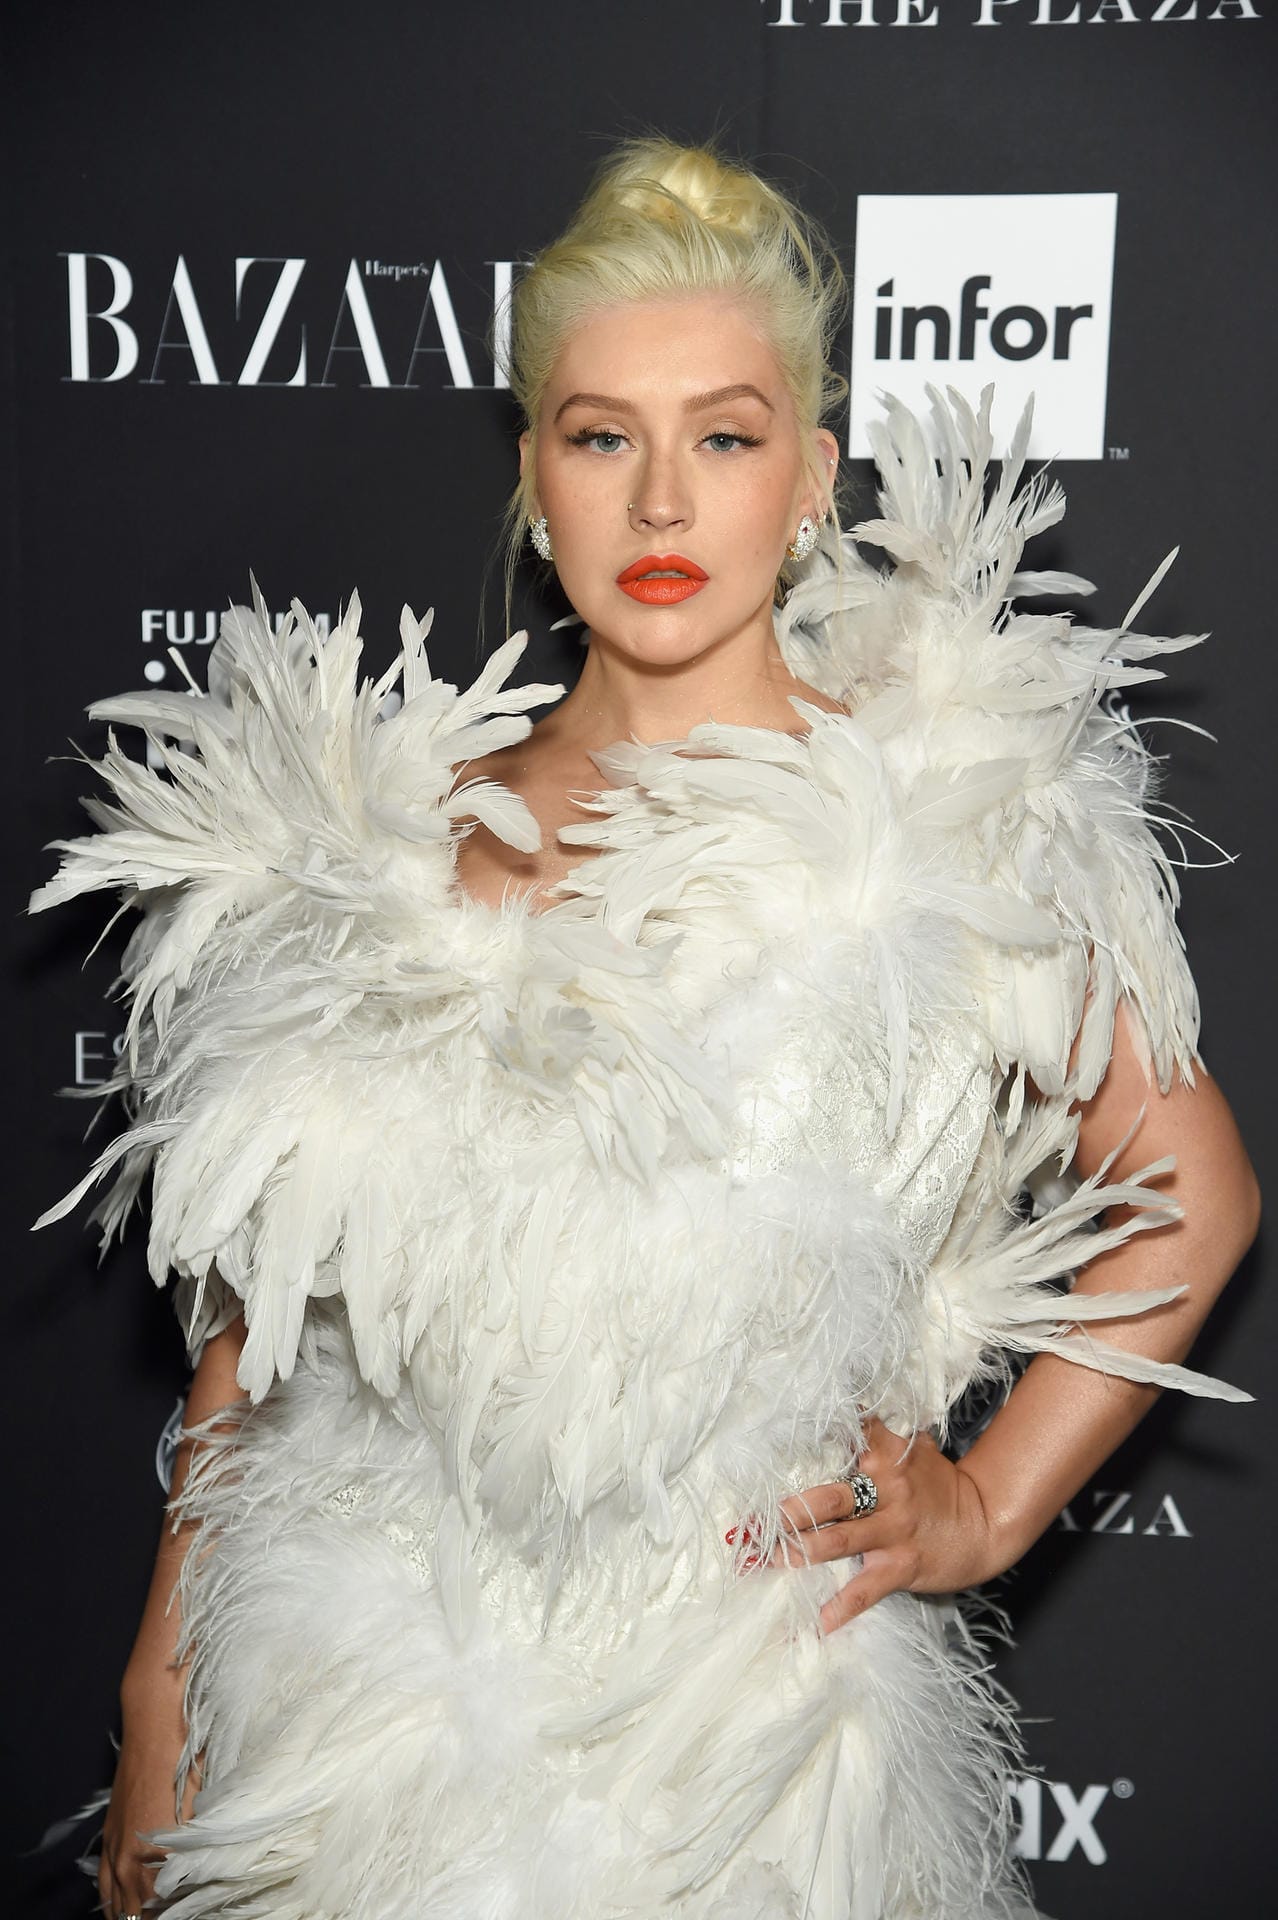 2018: Christina Aguilera beim Event Harper's BAZAAR Celebrates "ICONS By Carine Roitfeld" in New York